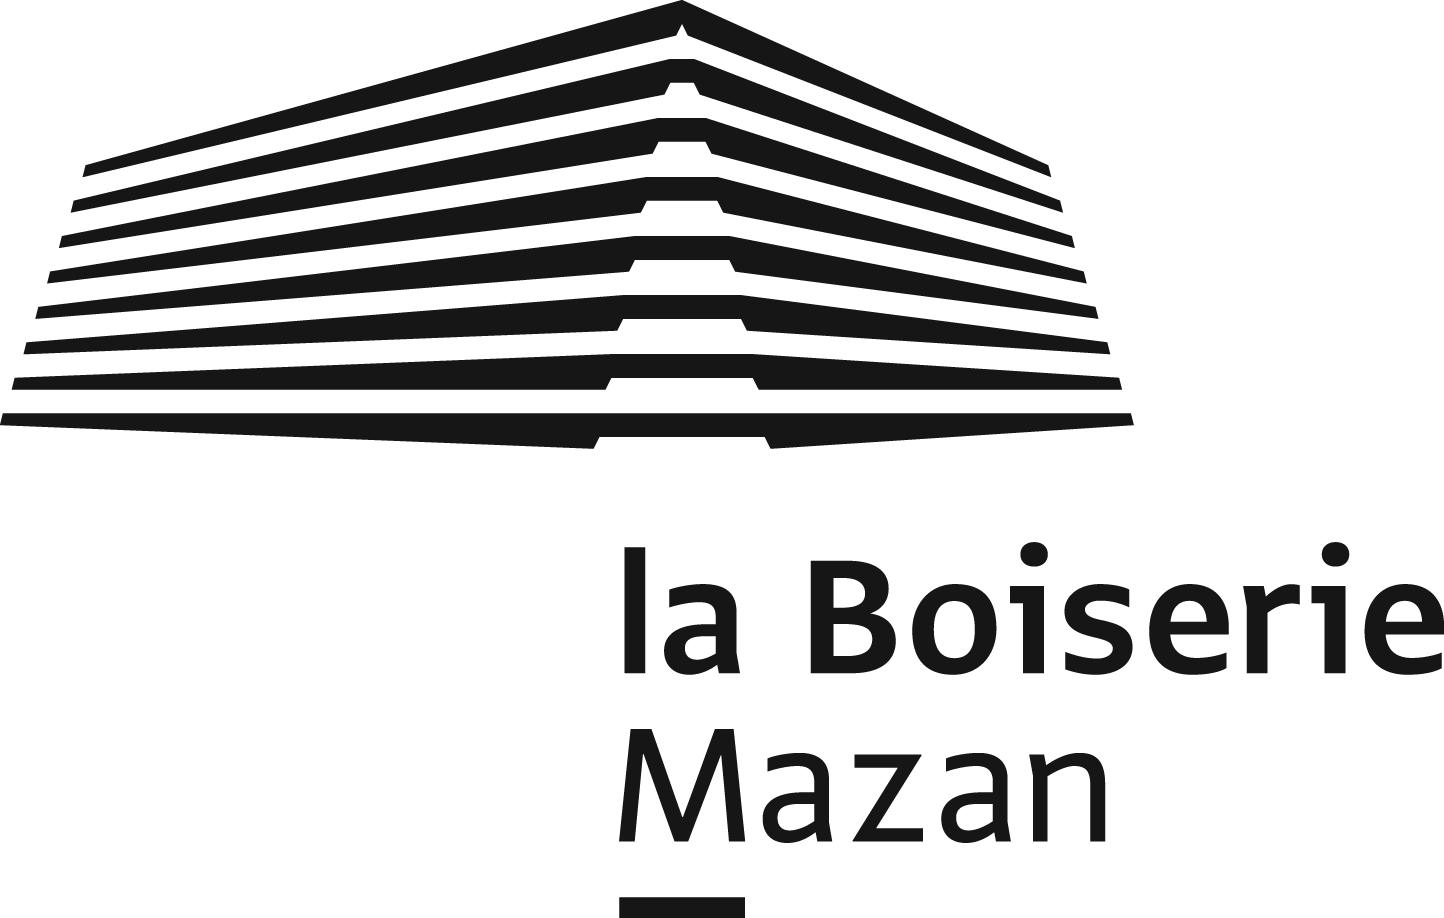 Logo Boiserie de Mazan